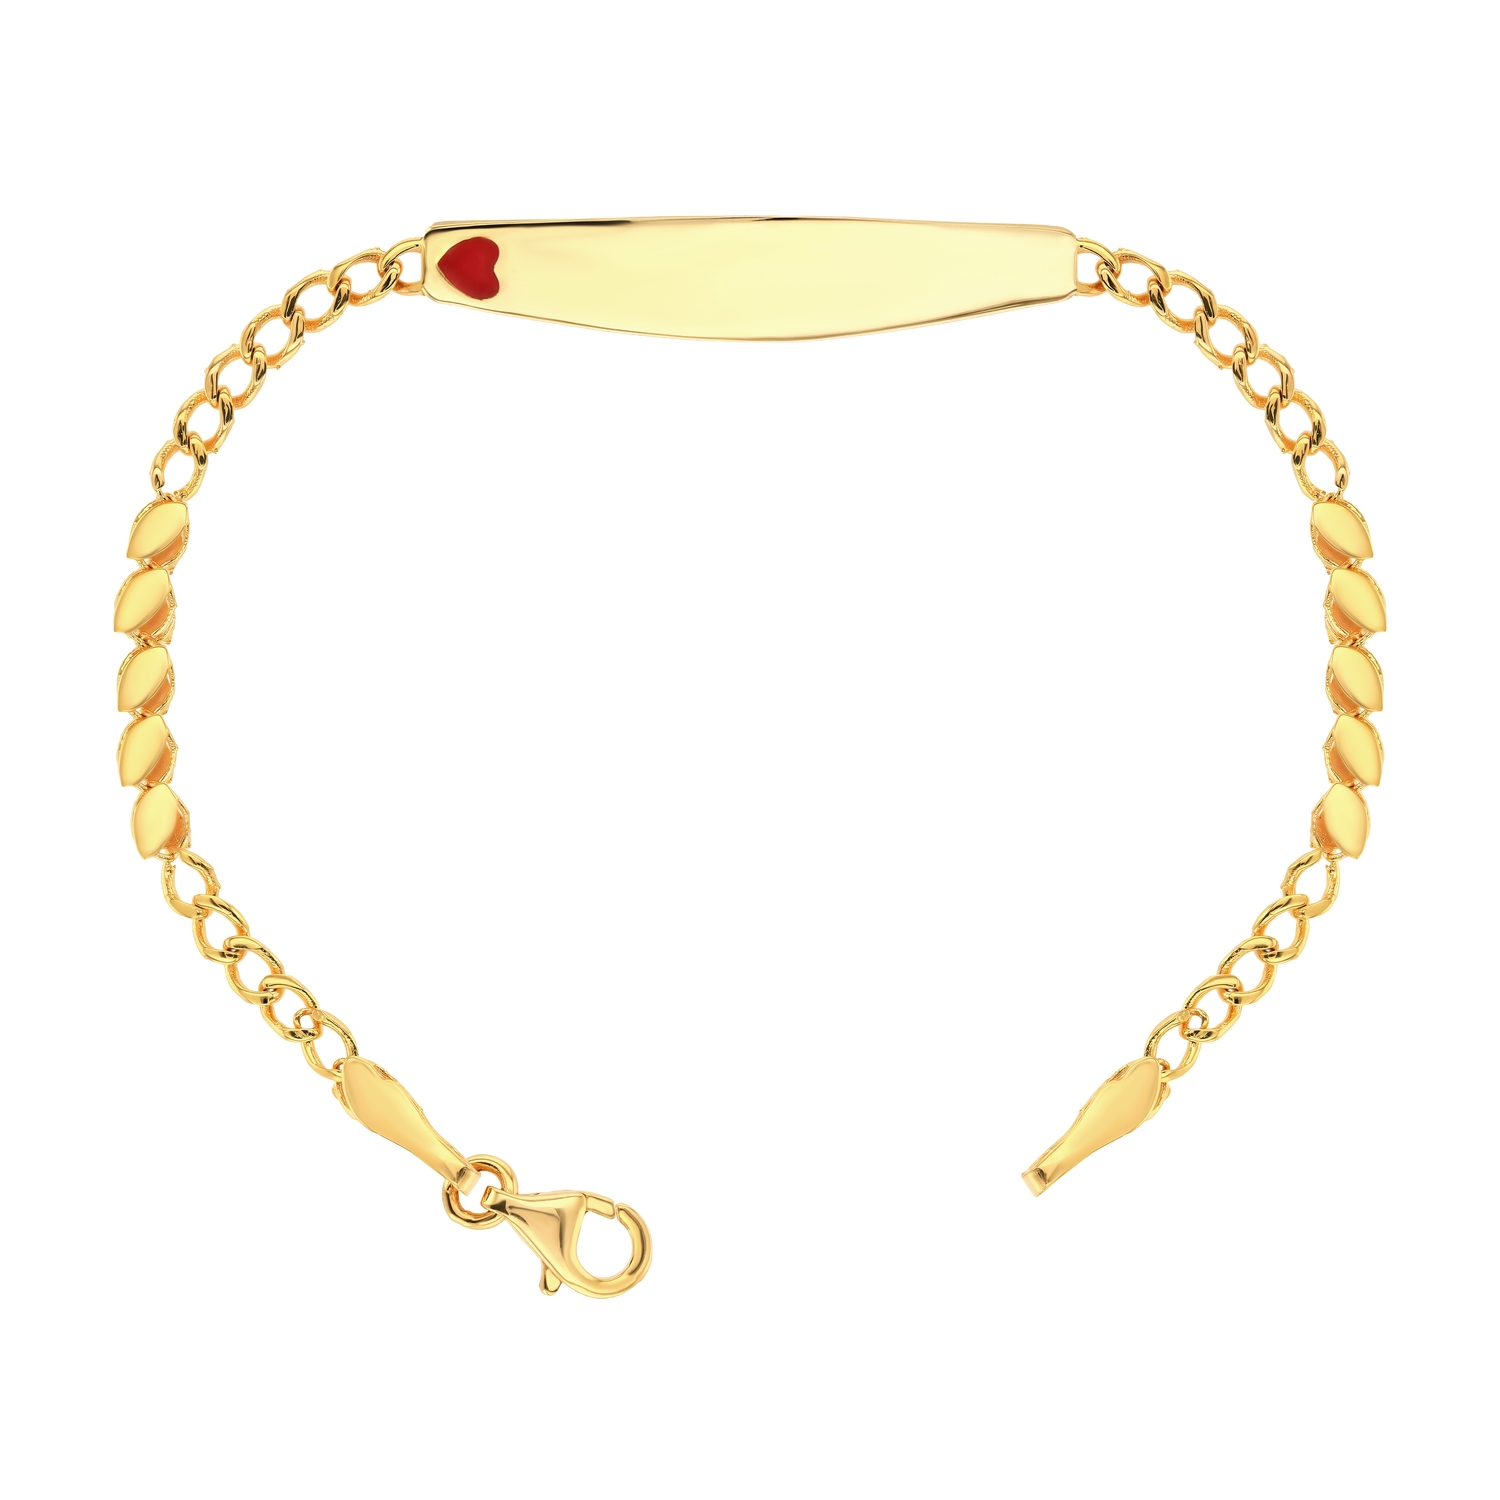 21K Red Heart-shaped Gold Kids Bracelet